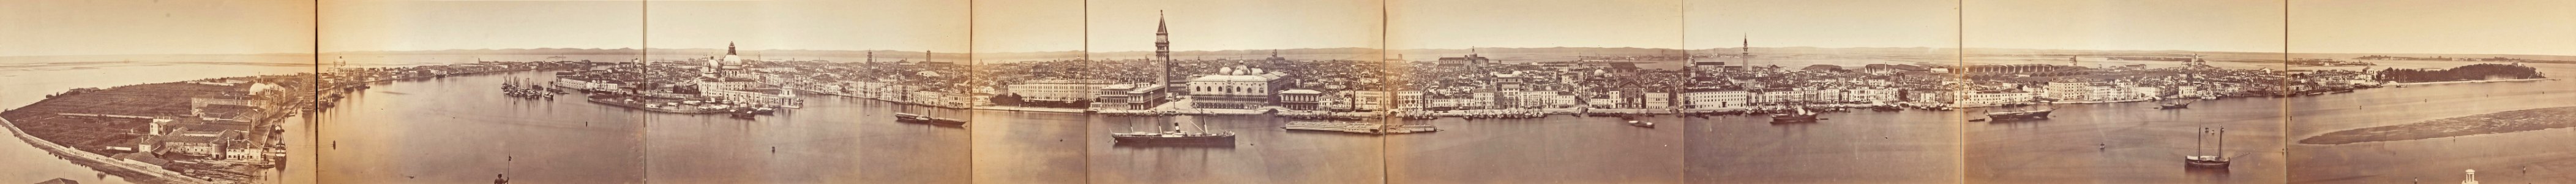 Panorama of Venice 1870s